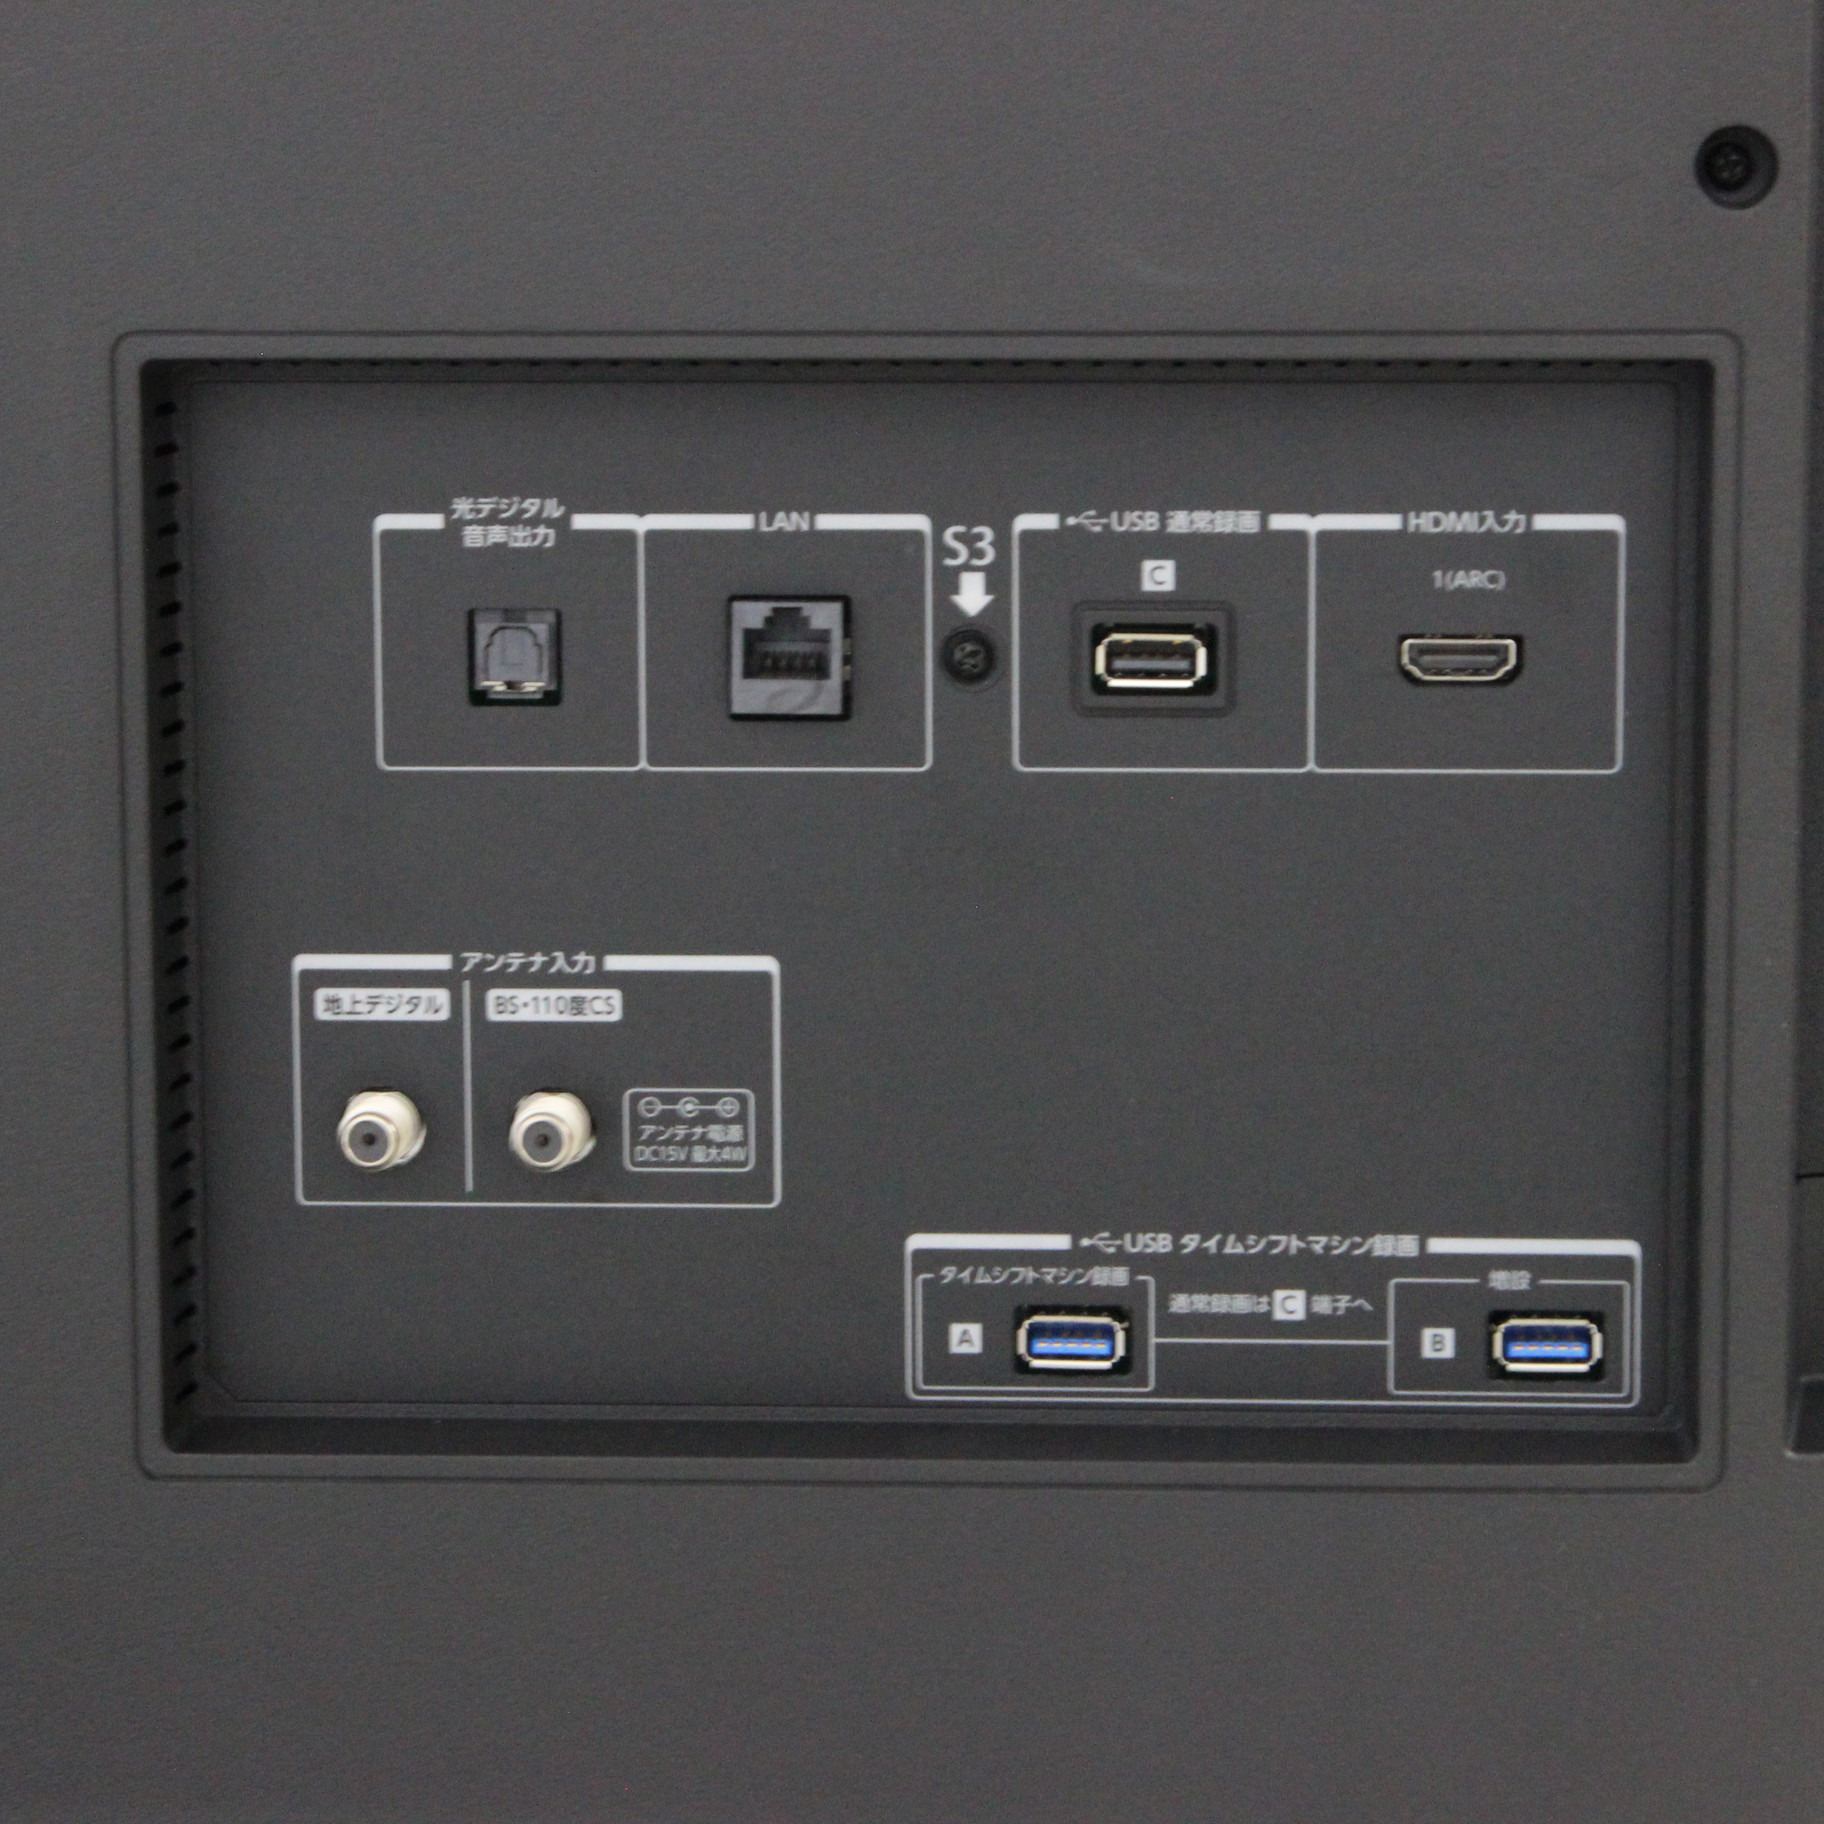 TOSHIBA 50Z740XS BLACK タイムシフト機能付き - 映像機器